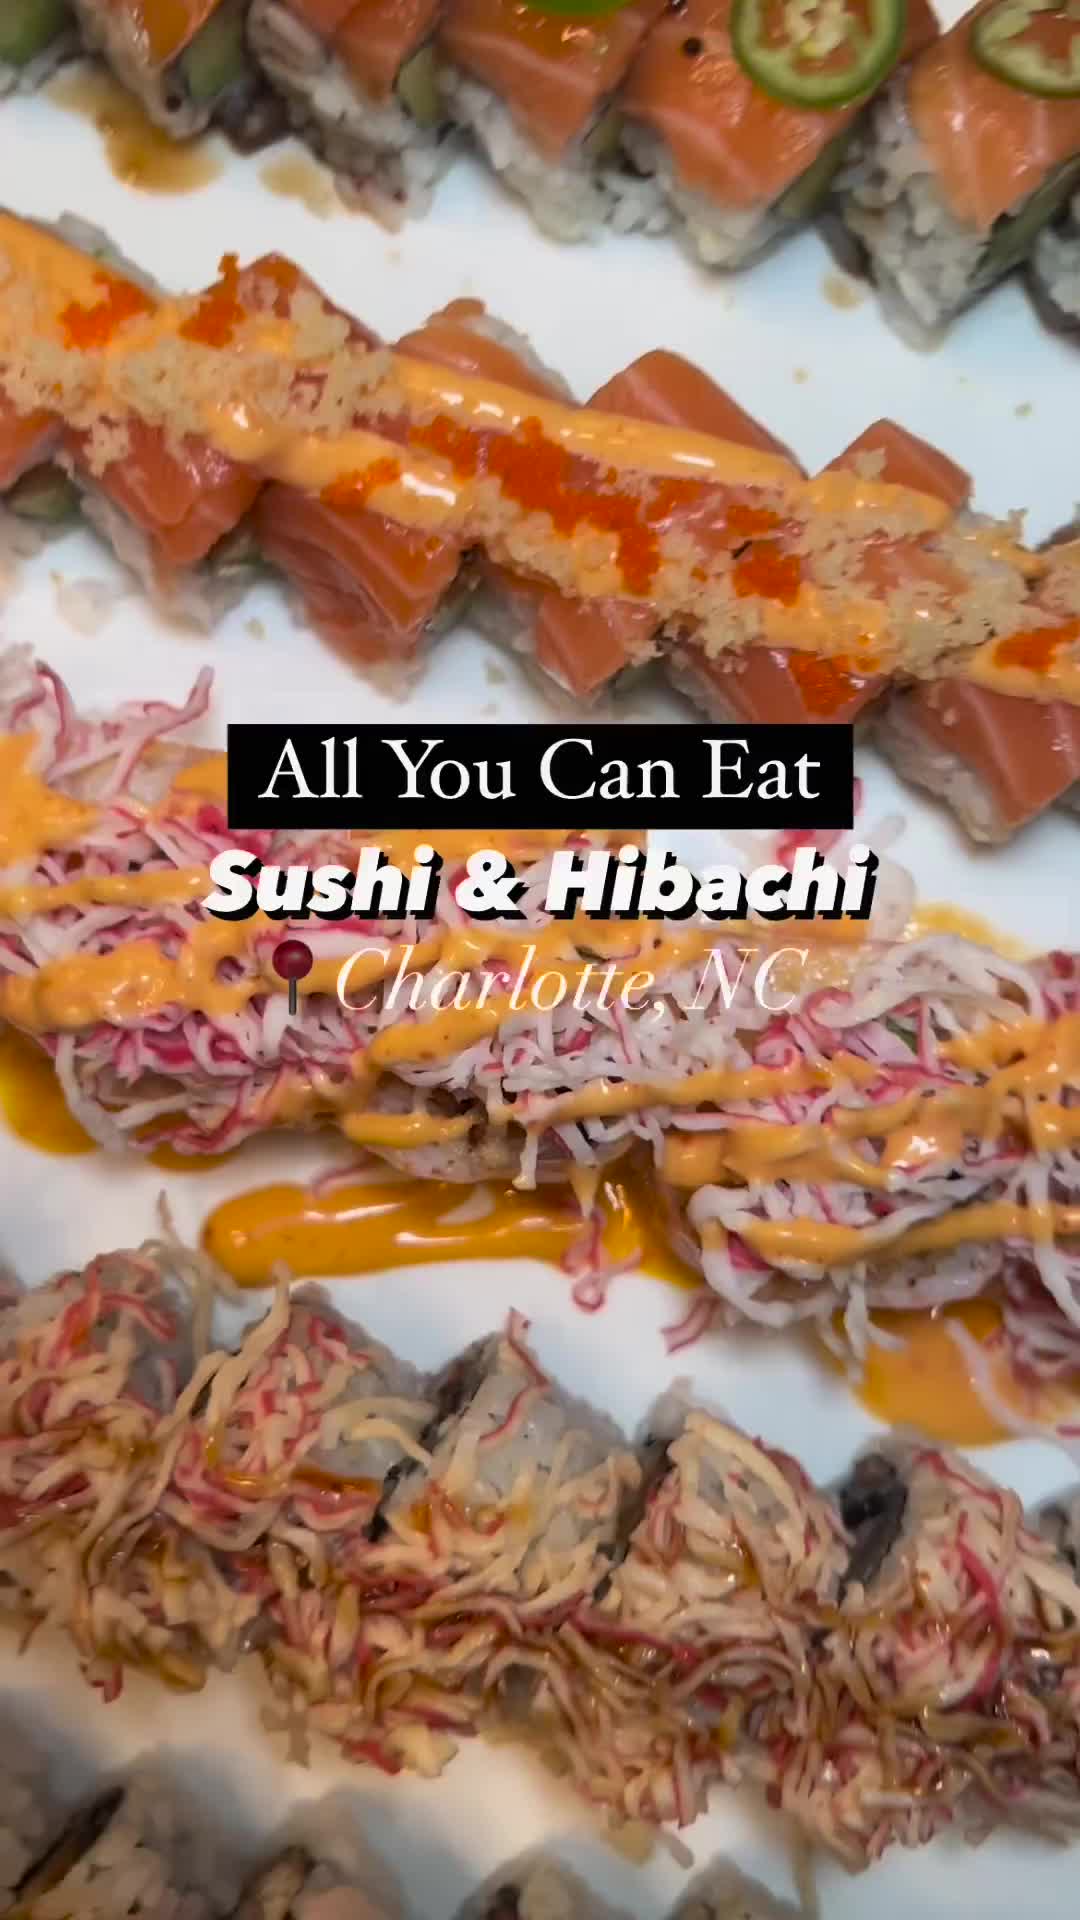 All You Can Eat Sushi & Hibachi at Magic Sushi Charlotte